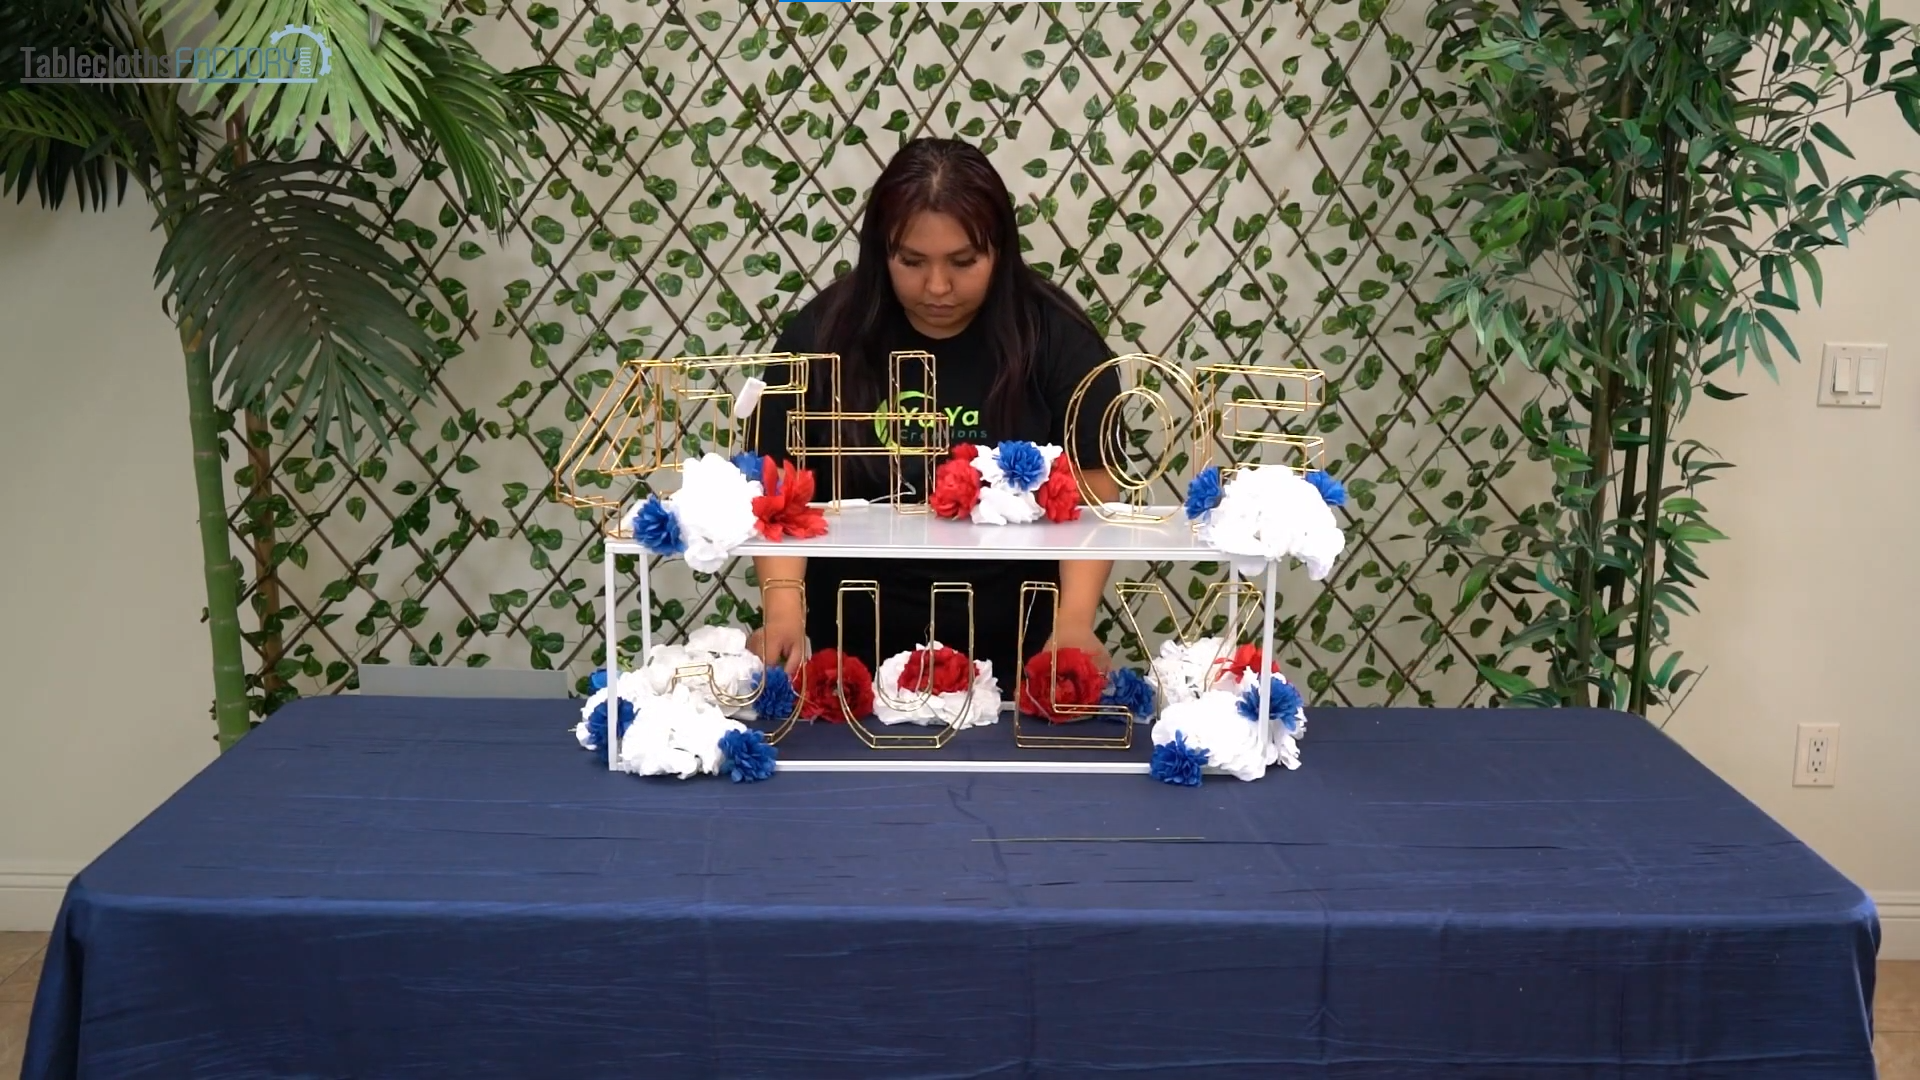 Woman arranging flowers around the centerpiece